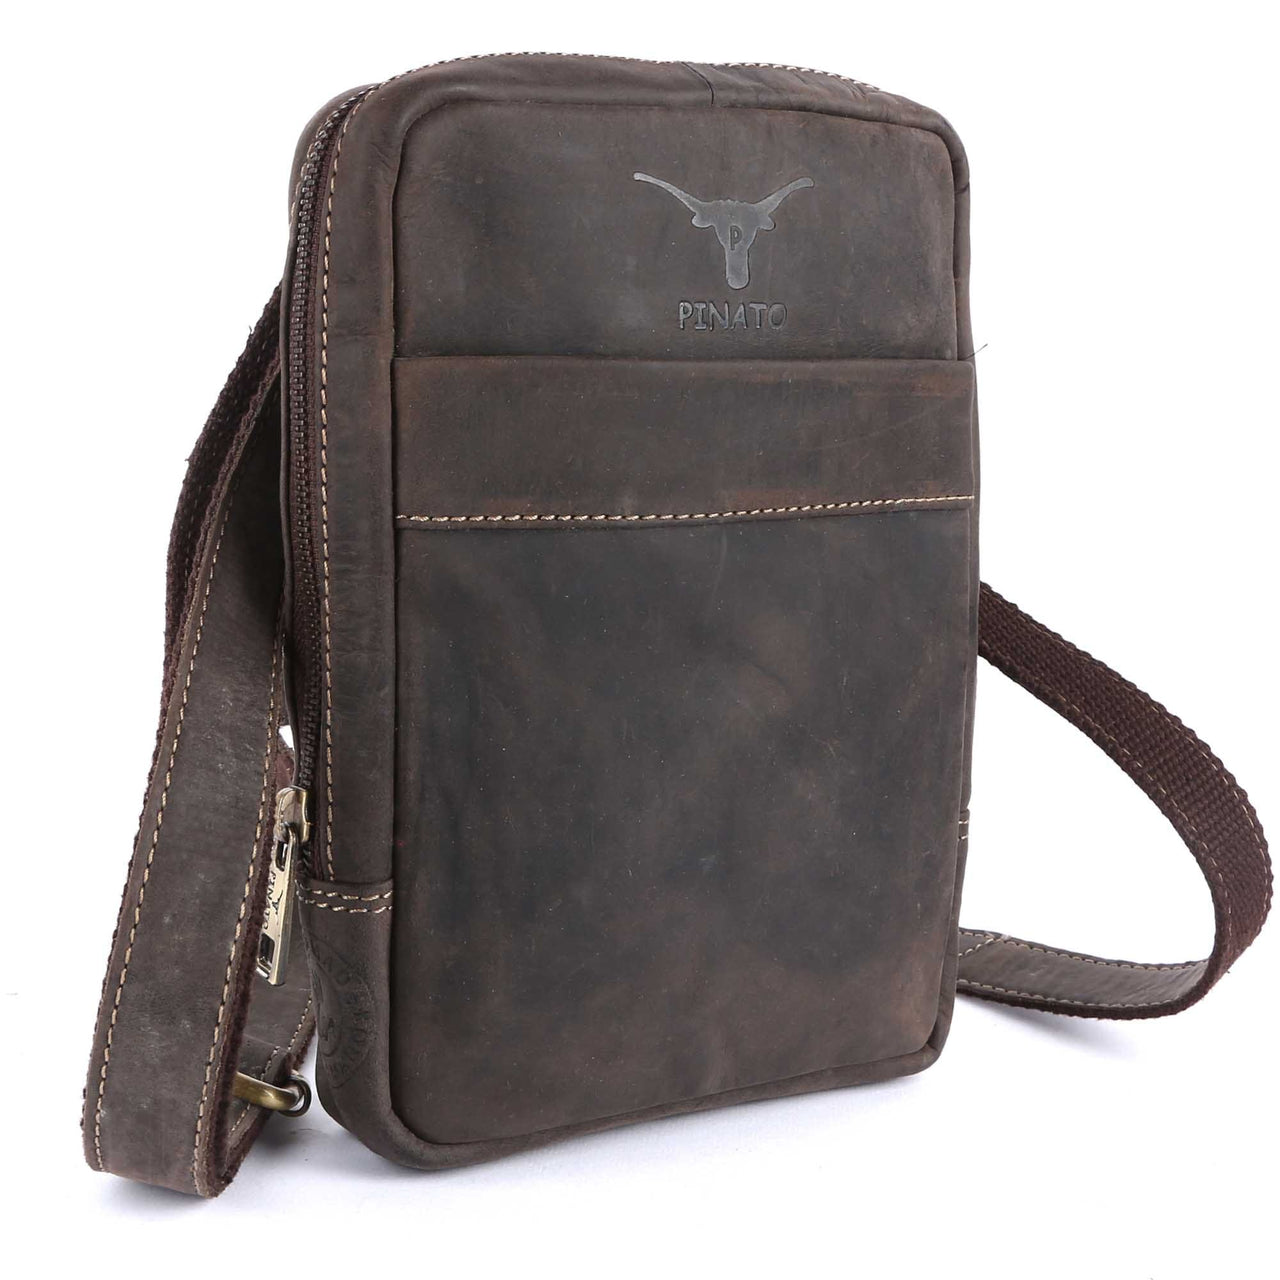 Pinato Genuine Leather Messenger Bag Brown for Women & Men (PL-5618)